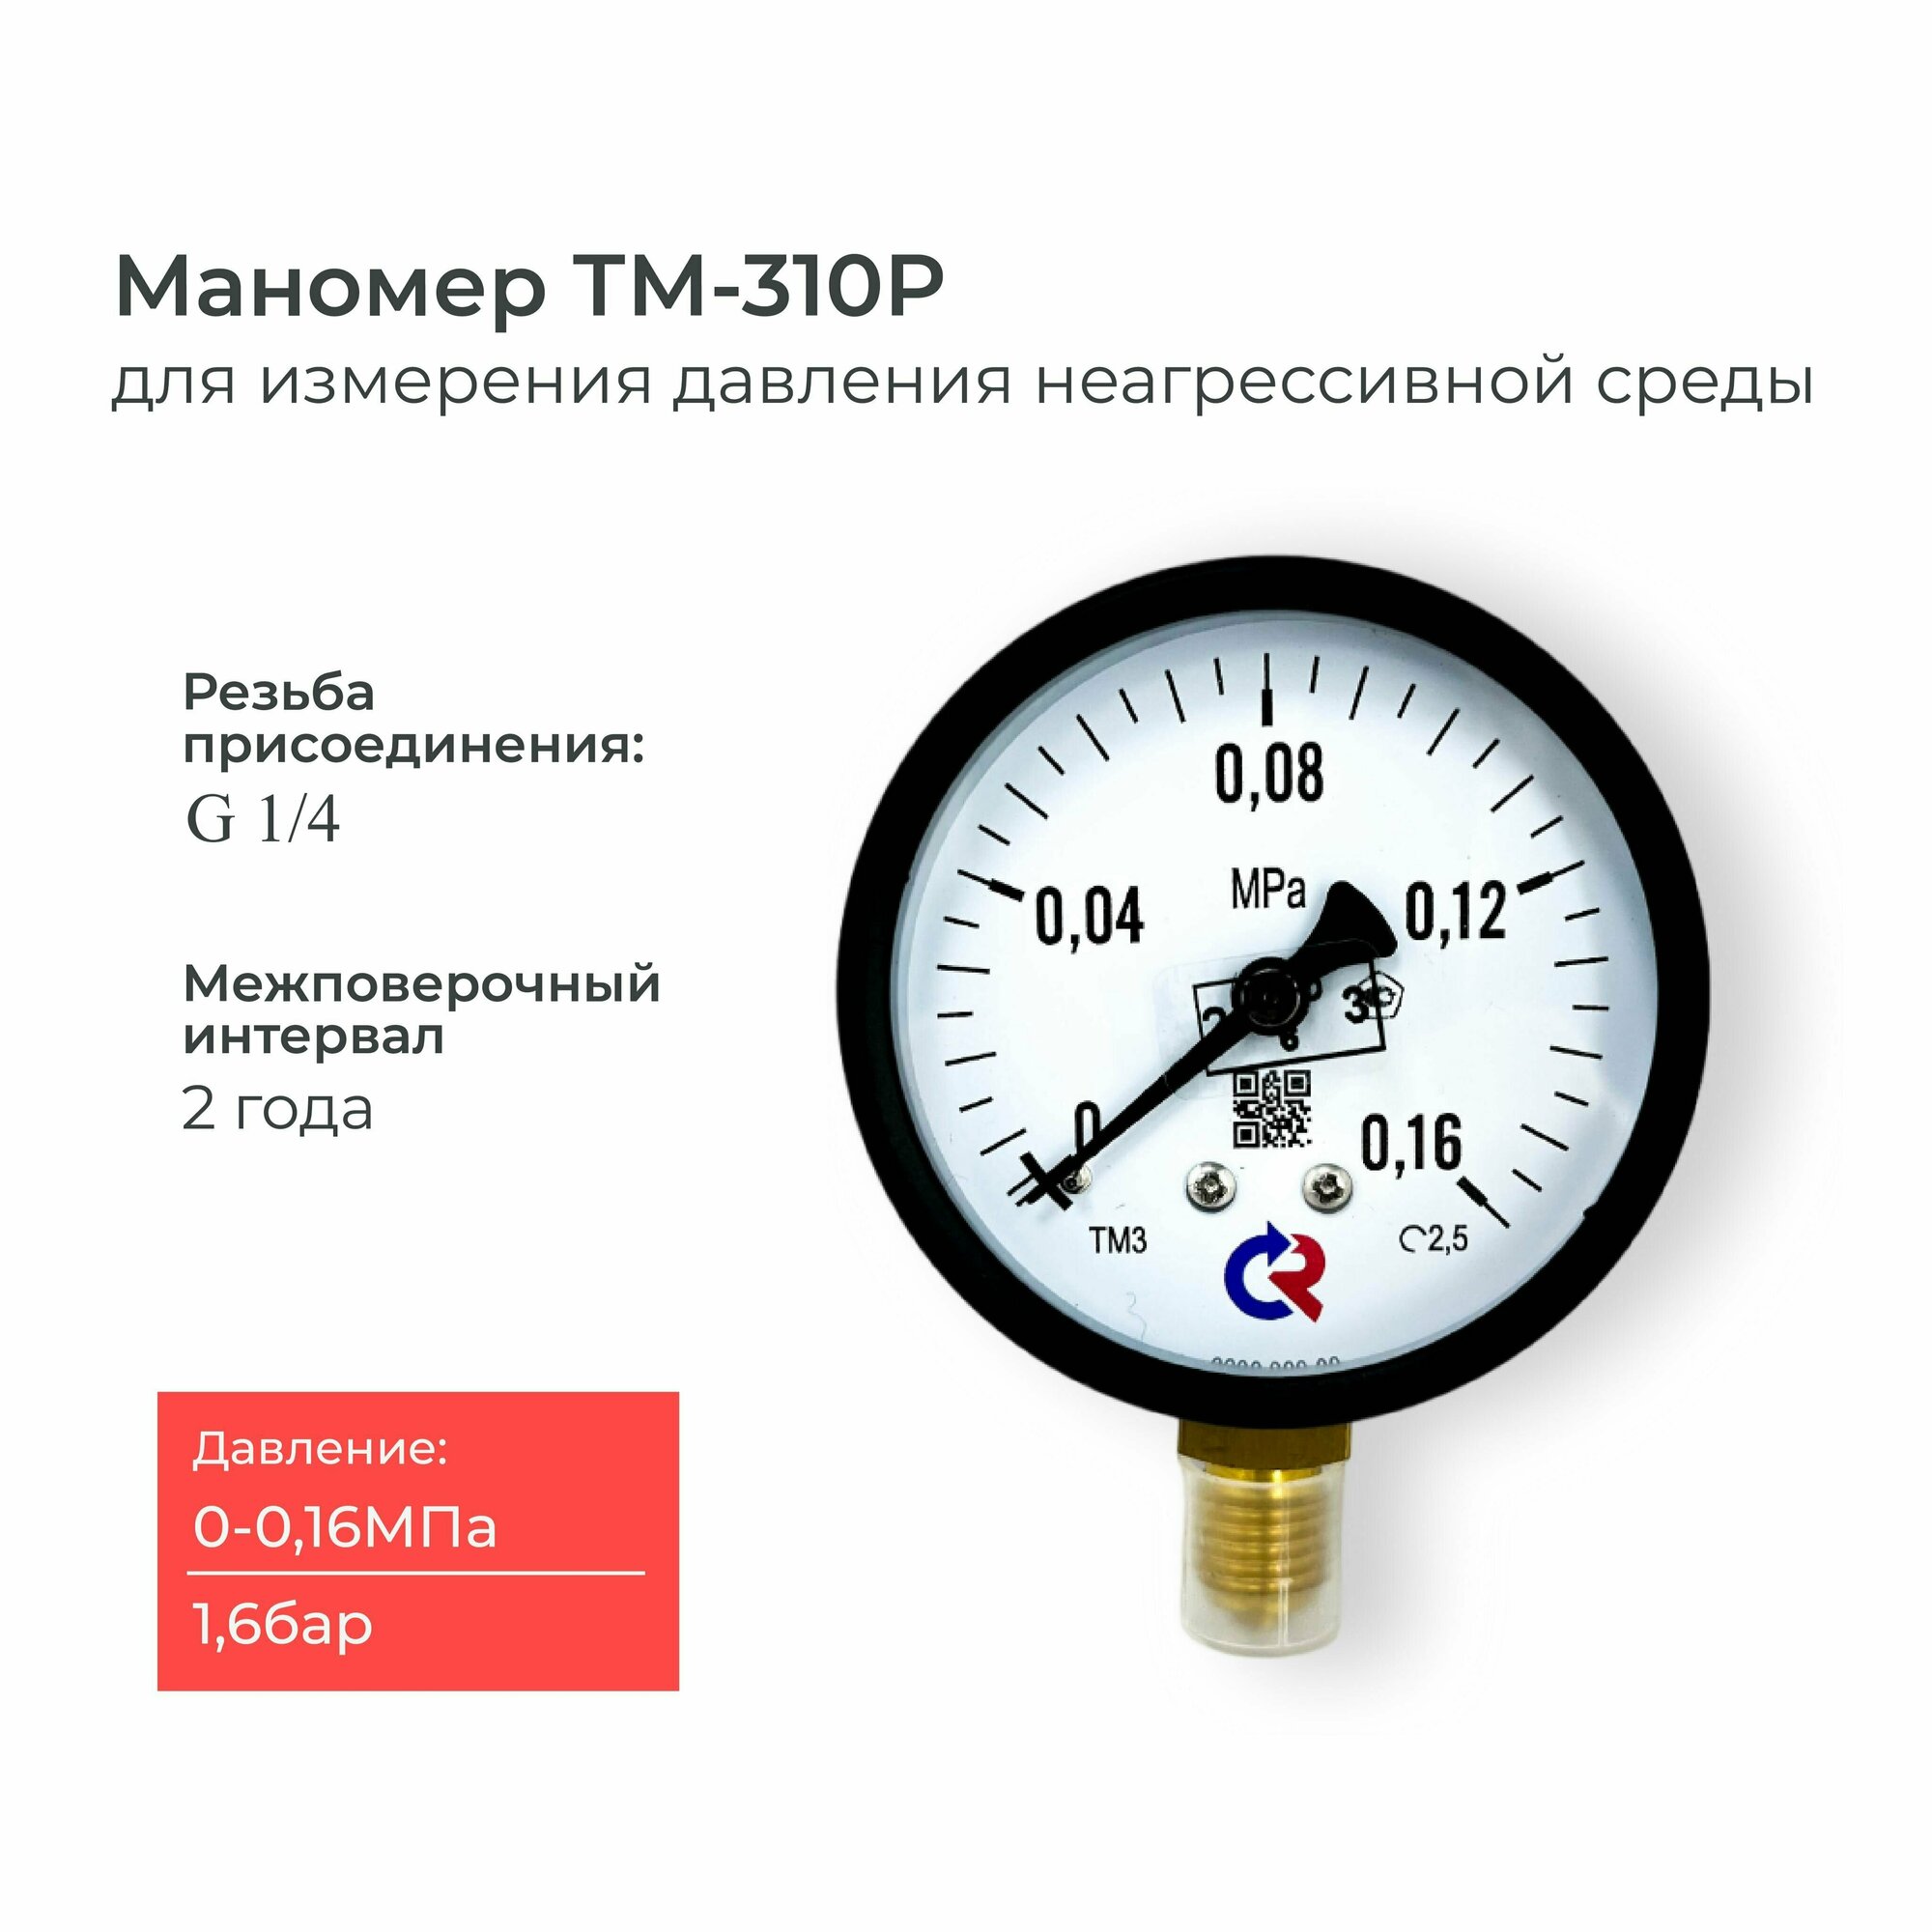 Манометр ТМ-310P давление 0-0.16 МПа (1.6 бар) резьба G1/4 класс точности 25 корпус 63 мм.